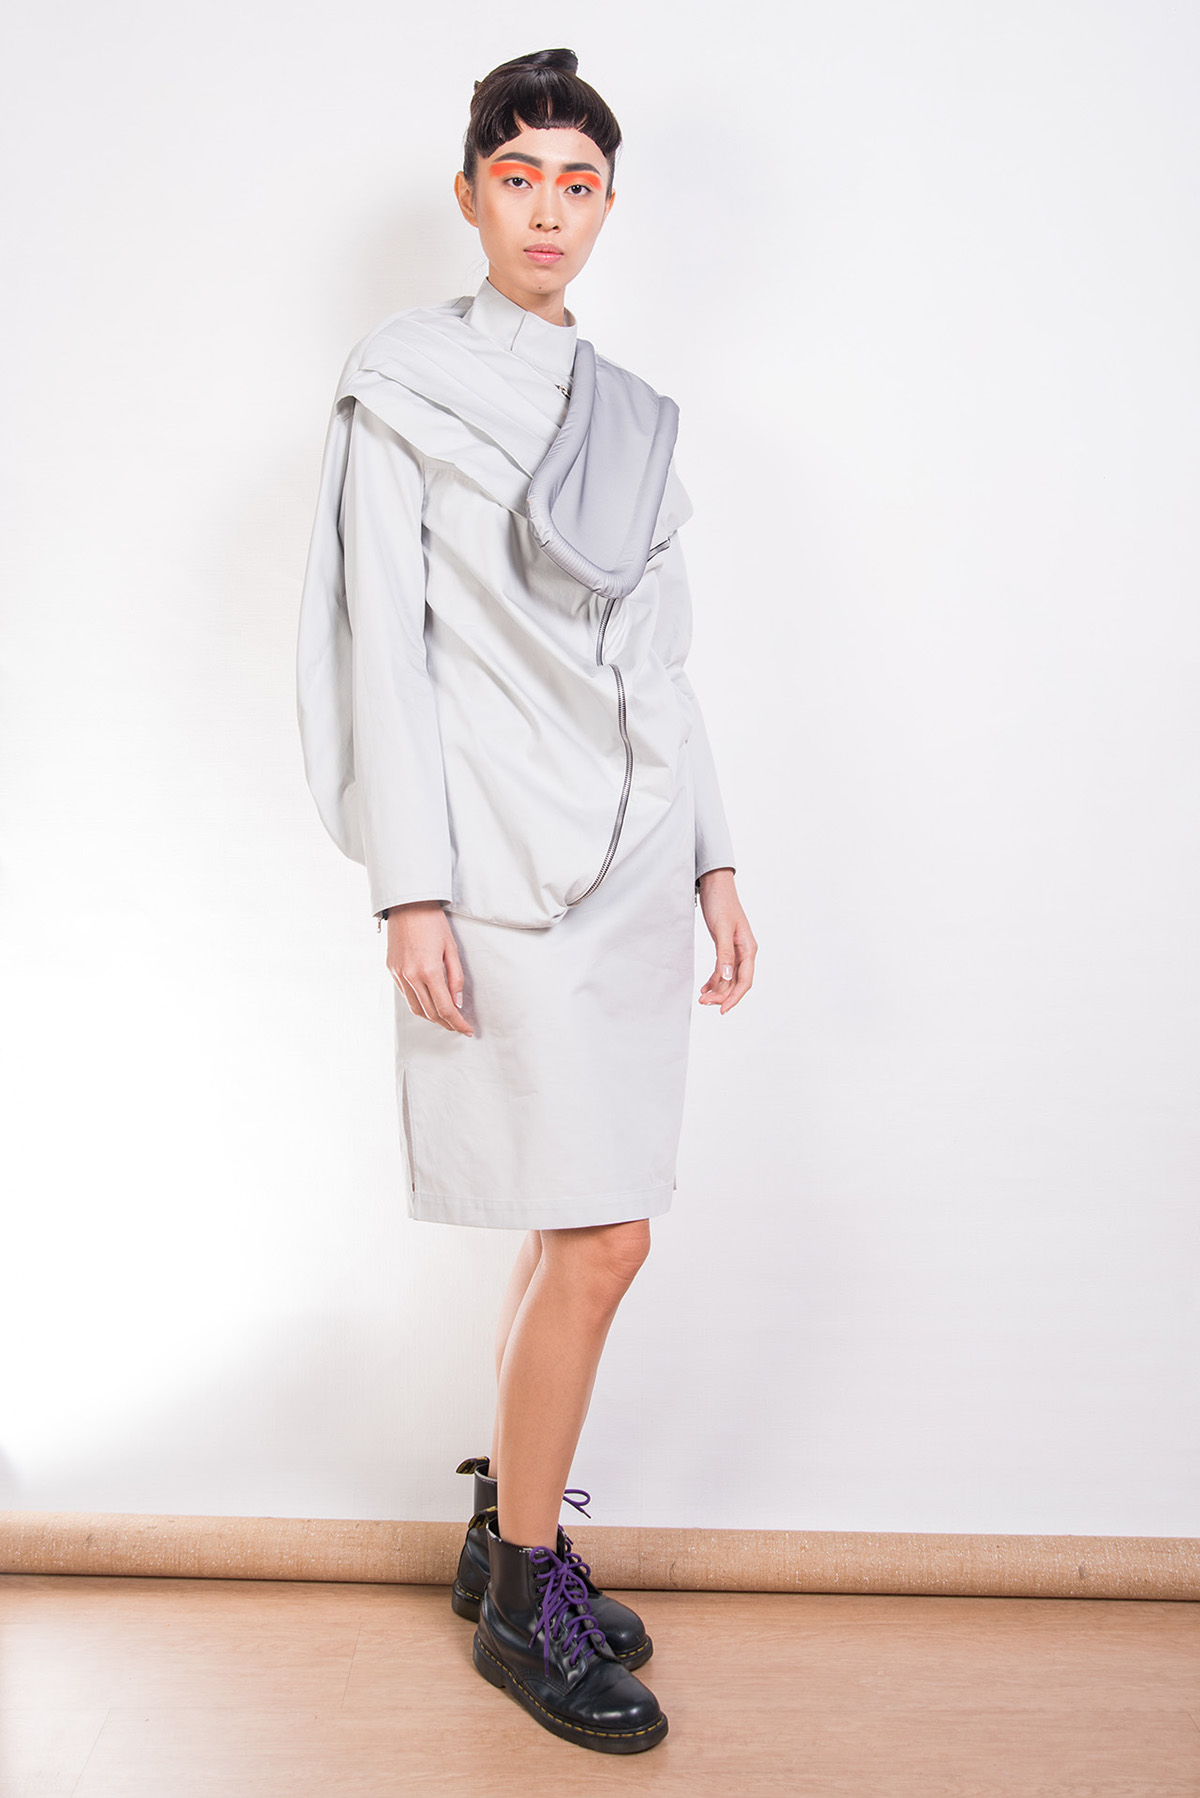 Fashion  anrealage sewing patternmaking fashiondesign design dress draping